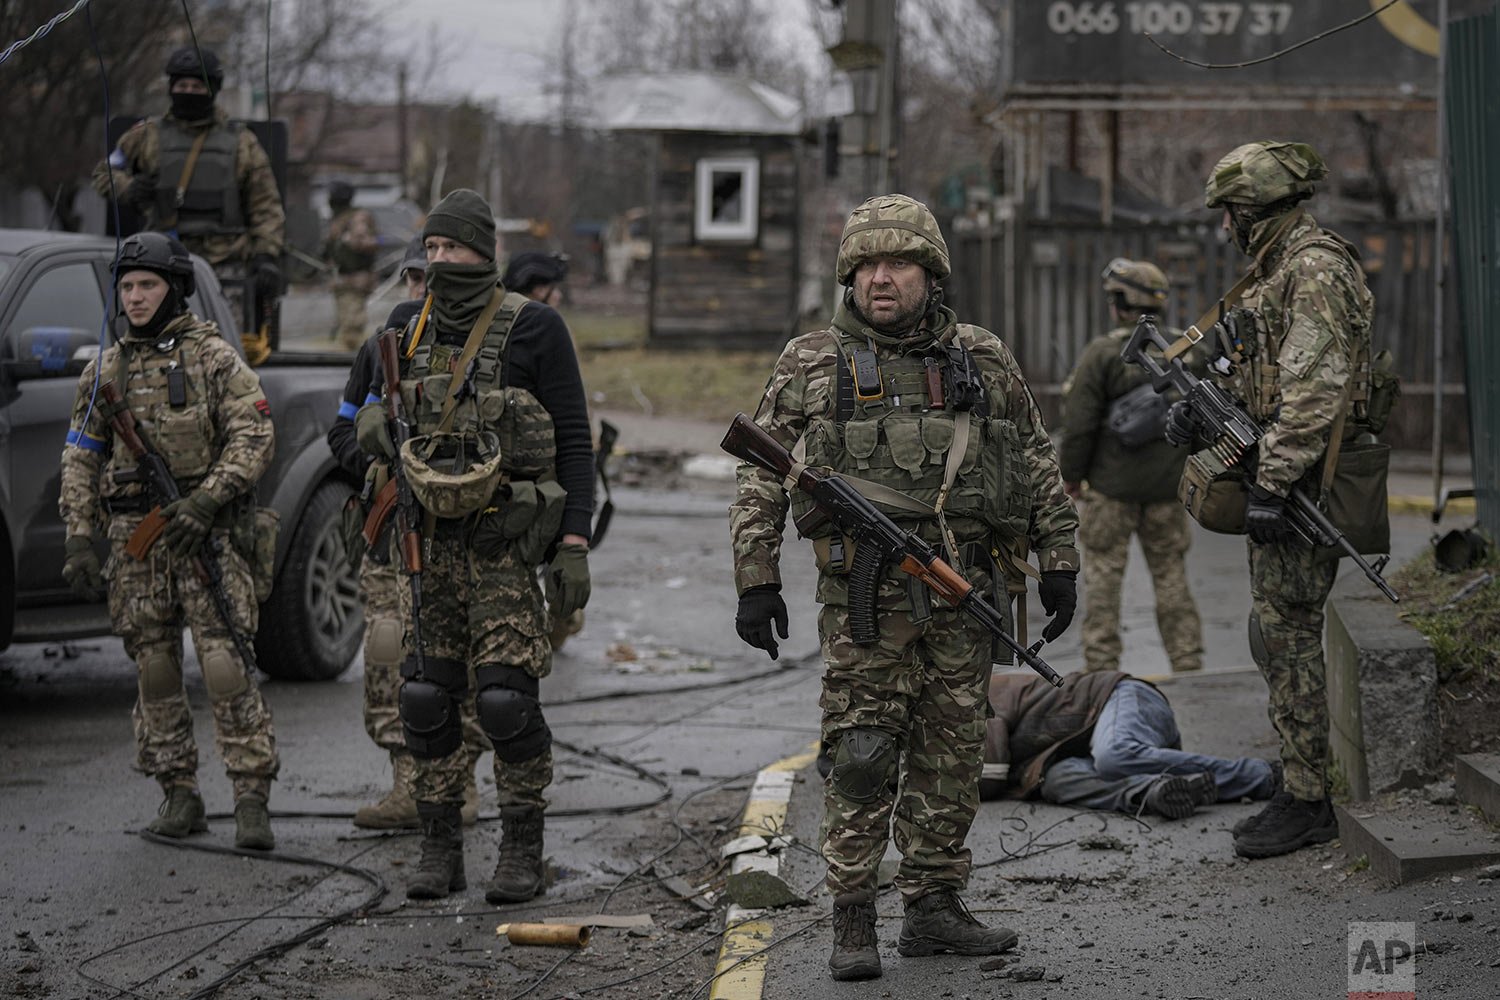  Ukrainian servicemen stand surrounding the body of man dressed in civilian clothing, in the formerly Russian-occupied Kyiv suburb of Bucha, Ukraine, Saturday, April 2, 2022.  (AP Photo/Vadim Ghirda) 